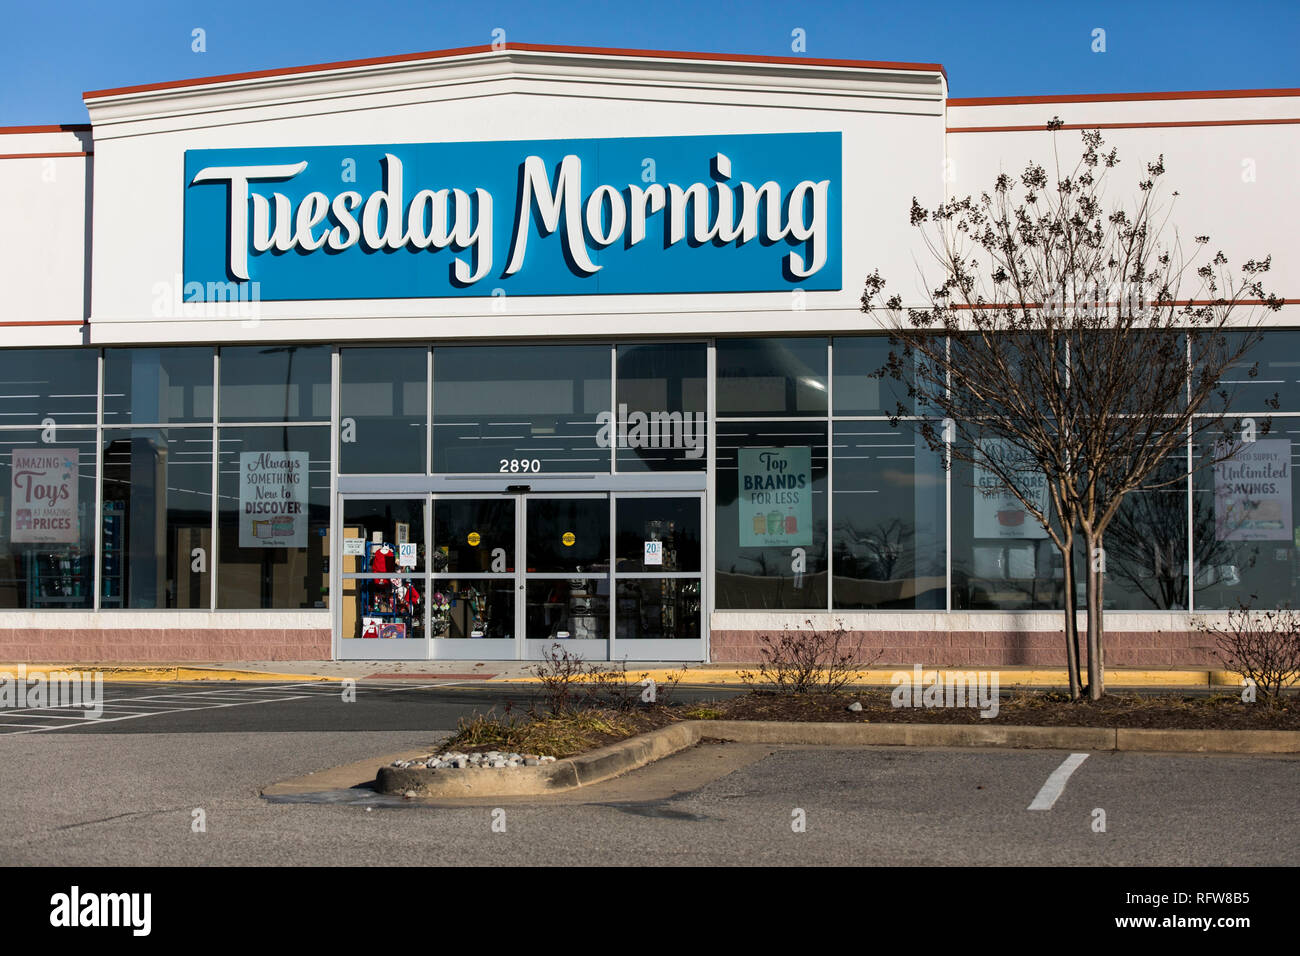 Tuesday Morning store closing in Green Bay amid bankruptcy filng